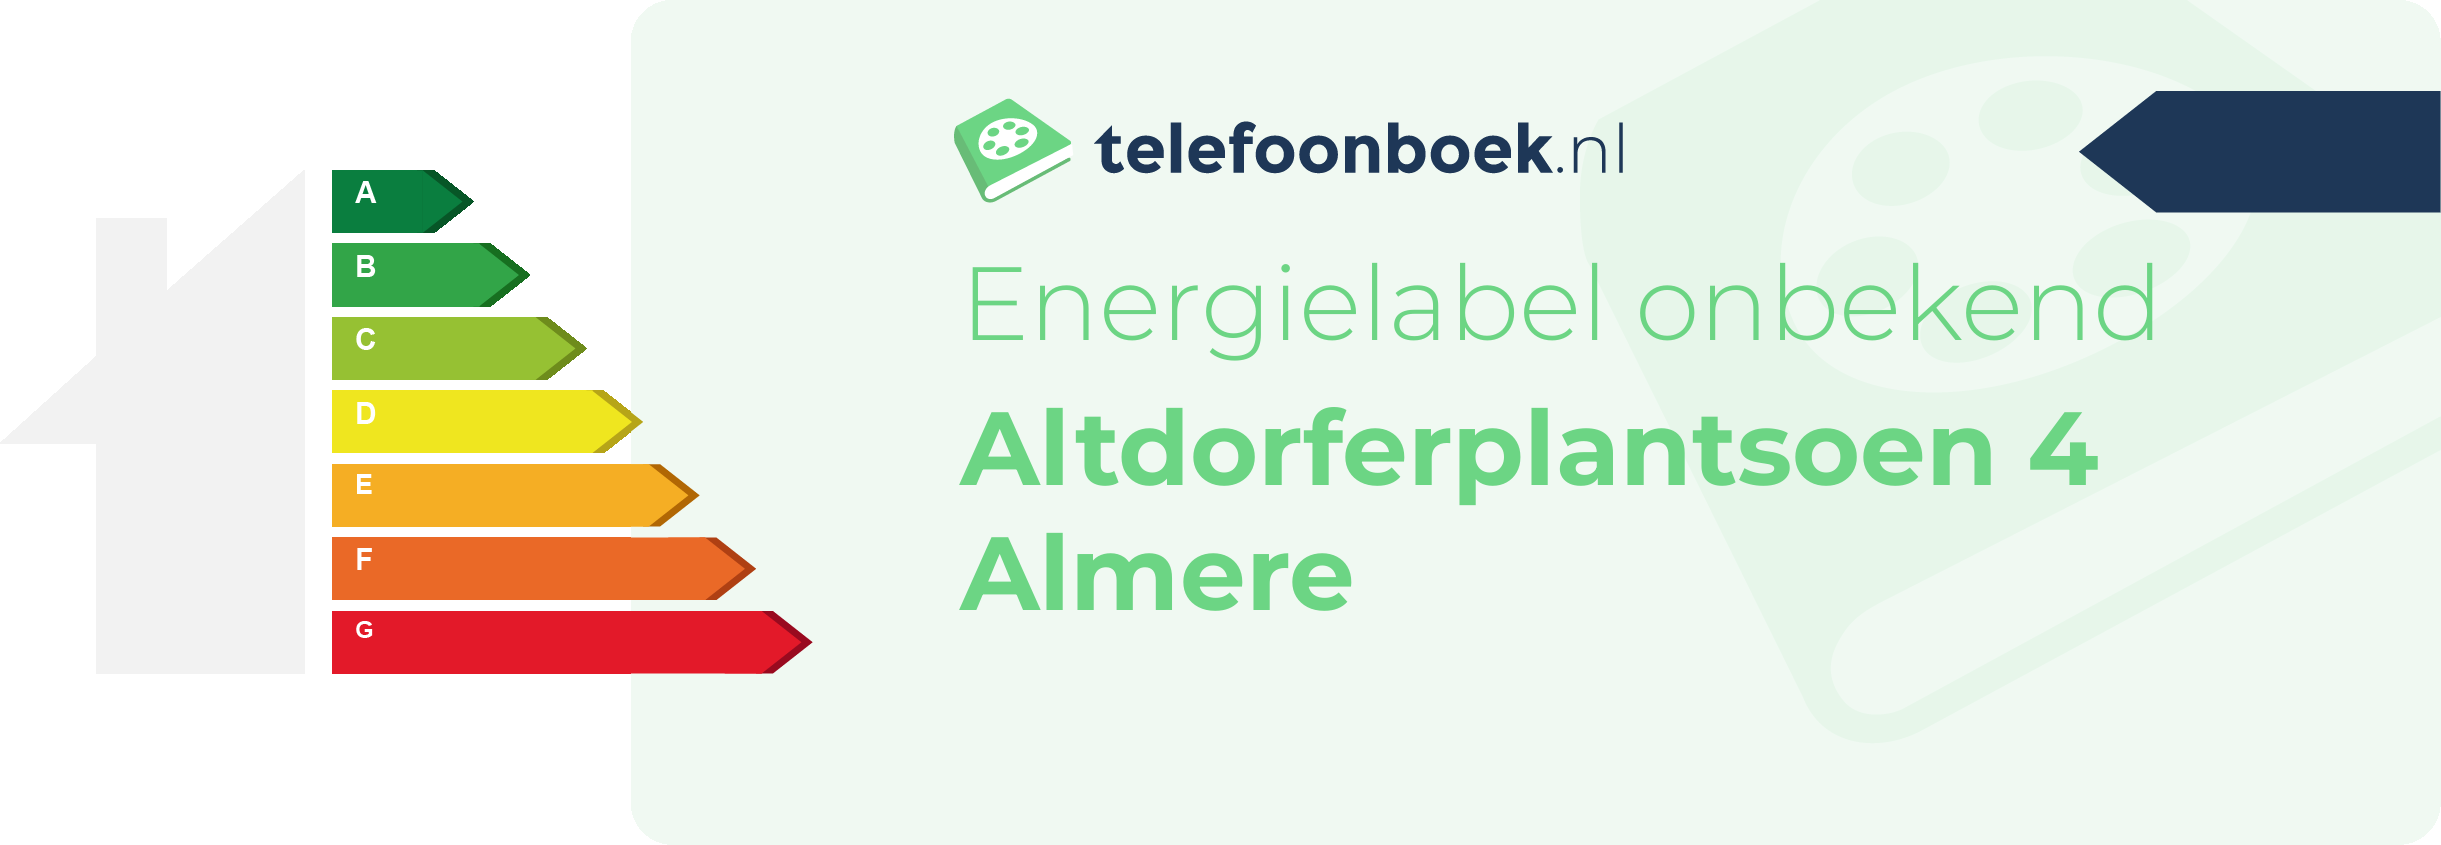 Energielabel Altdorferplantsoen 4 Almere